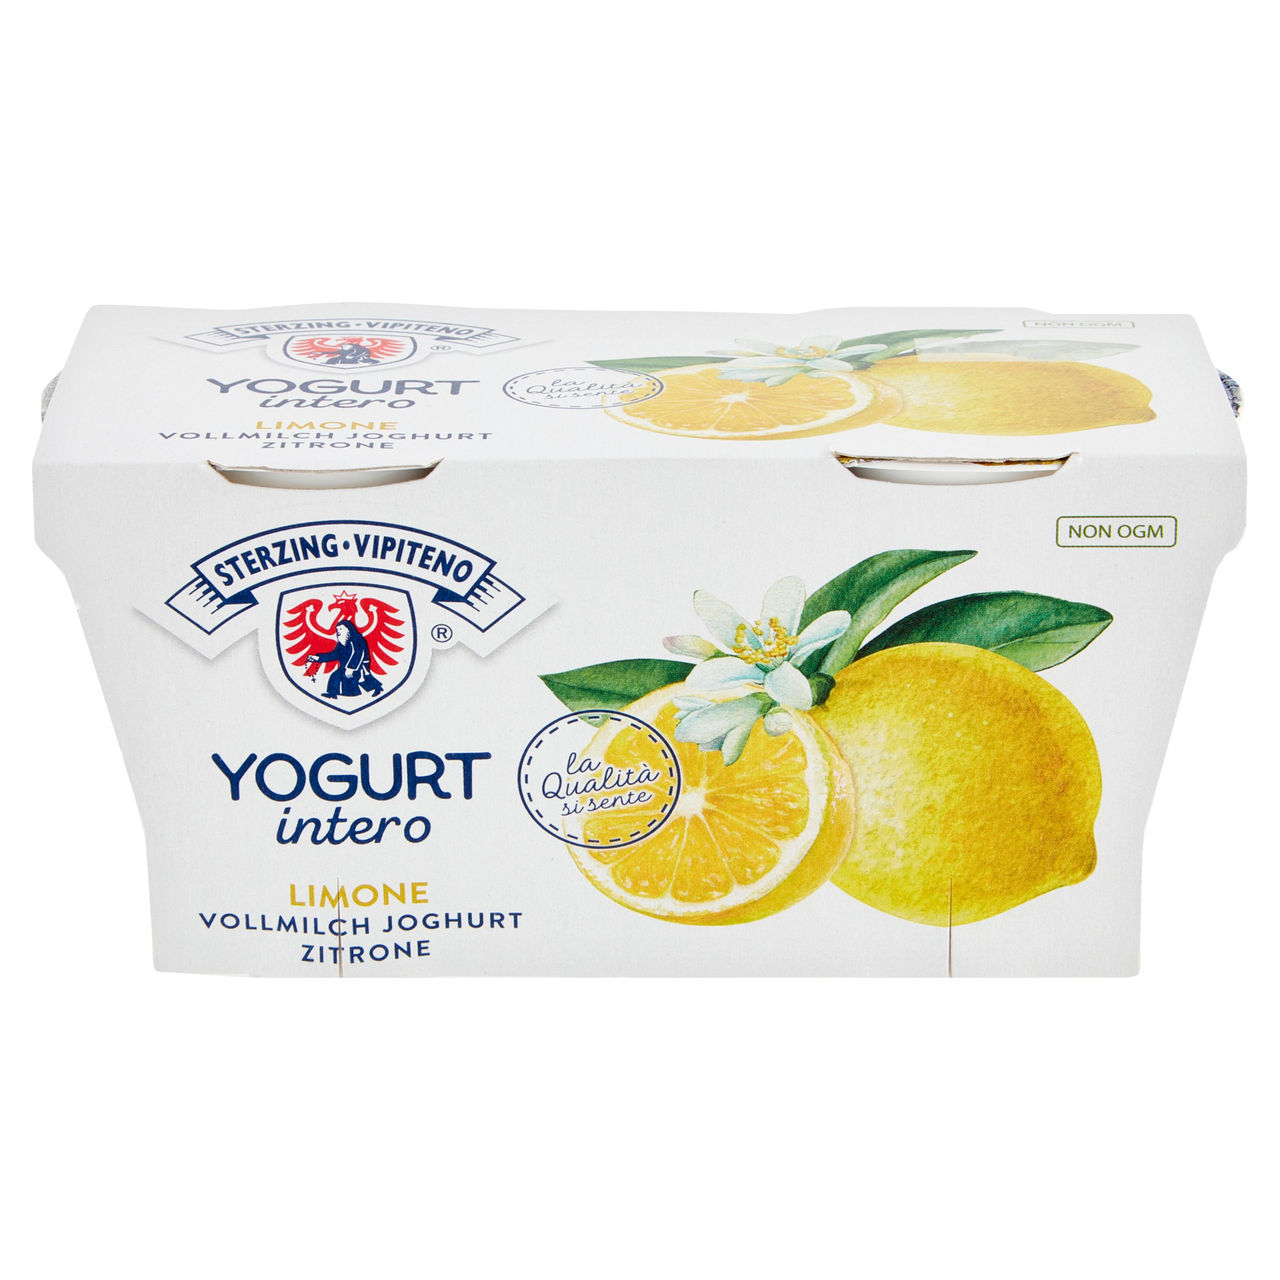 Sterzing Vipiteno Yogurt Limone in vendita online